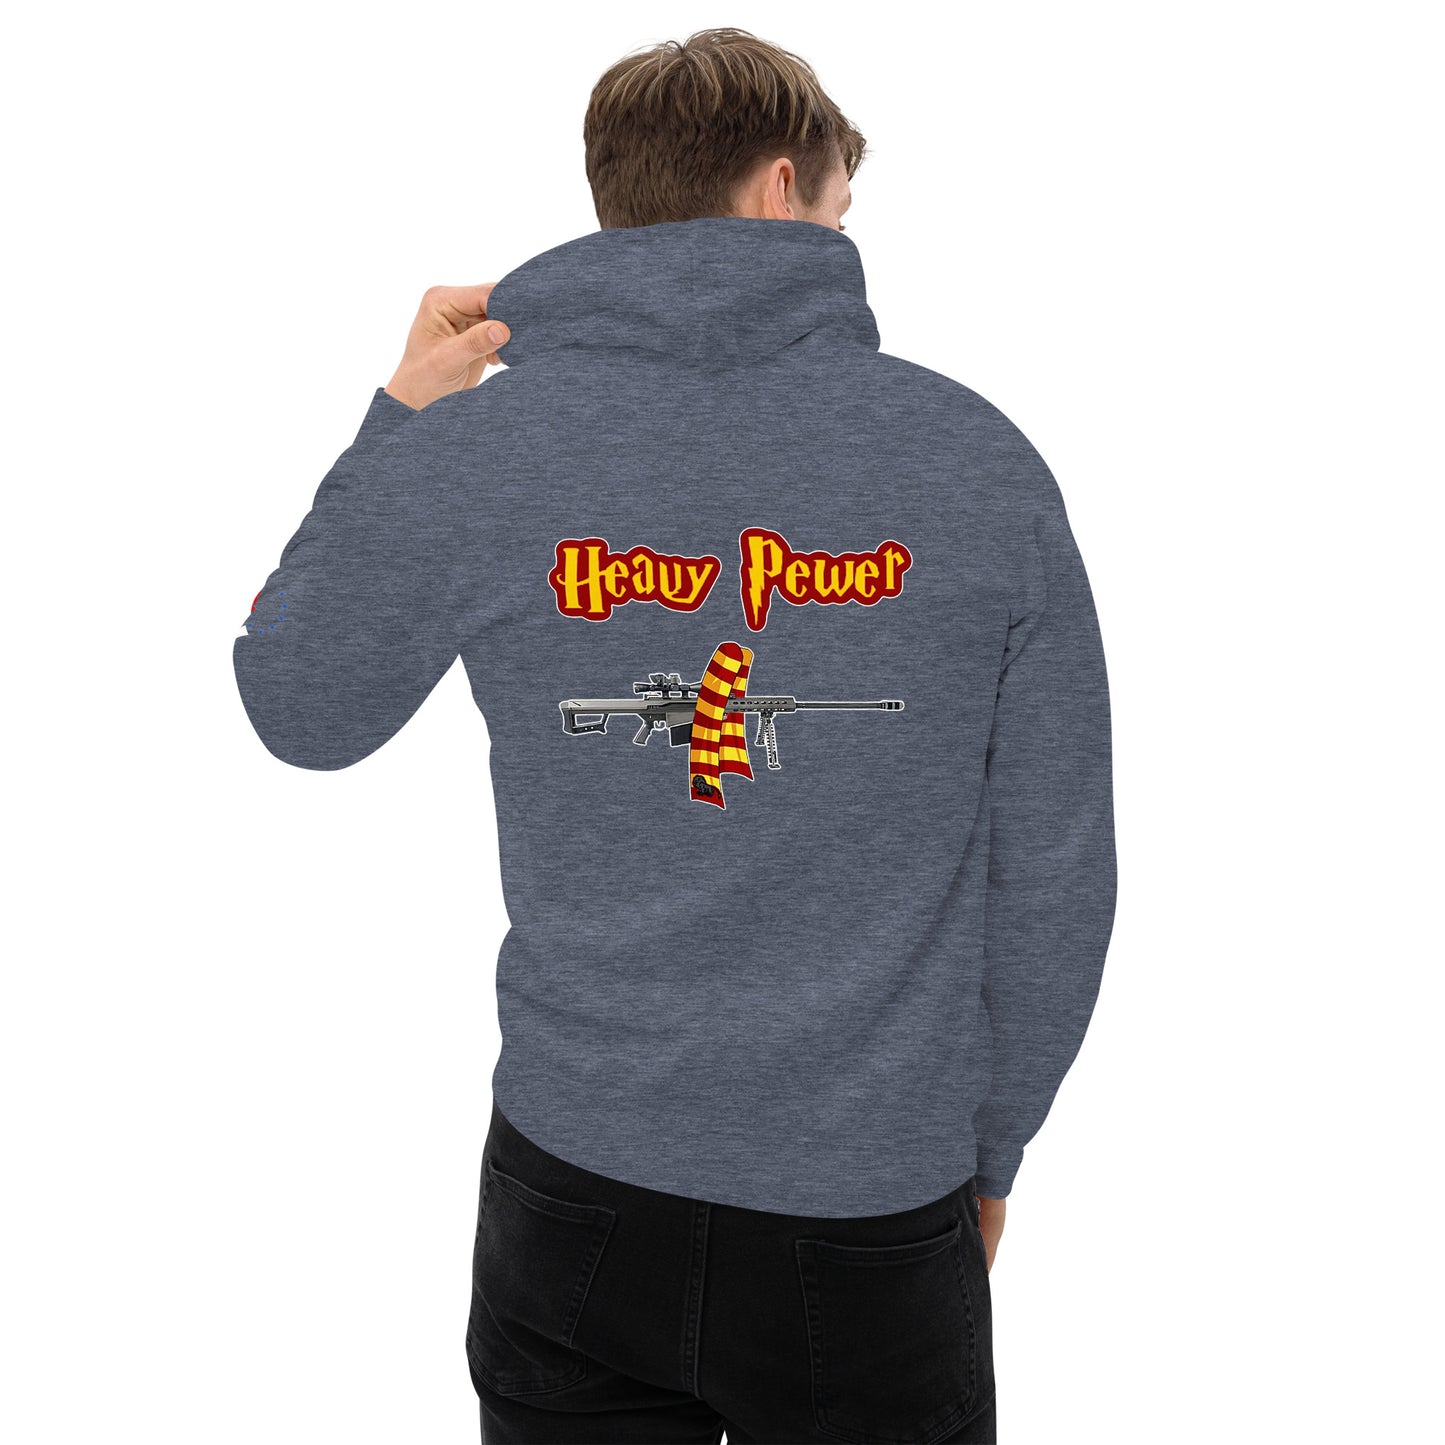 Heavy Pewer-Harry Potter Parody Unisex Hoodie